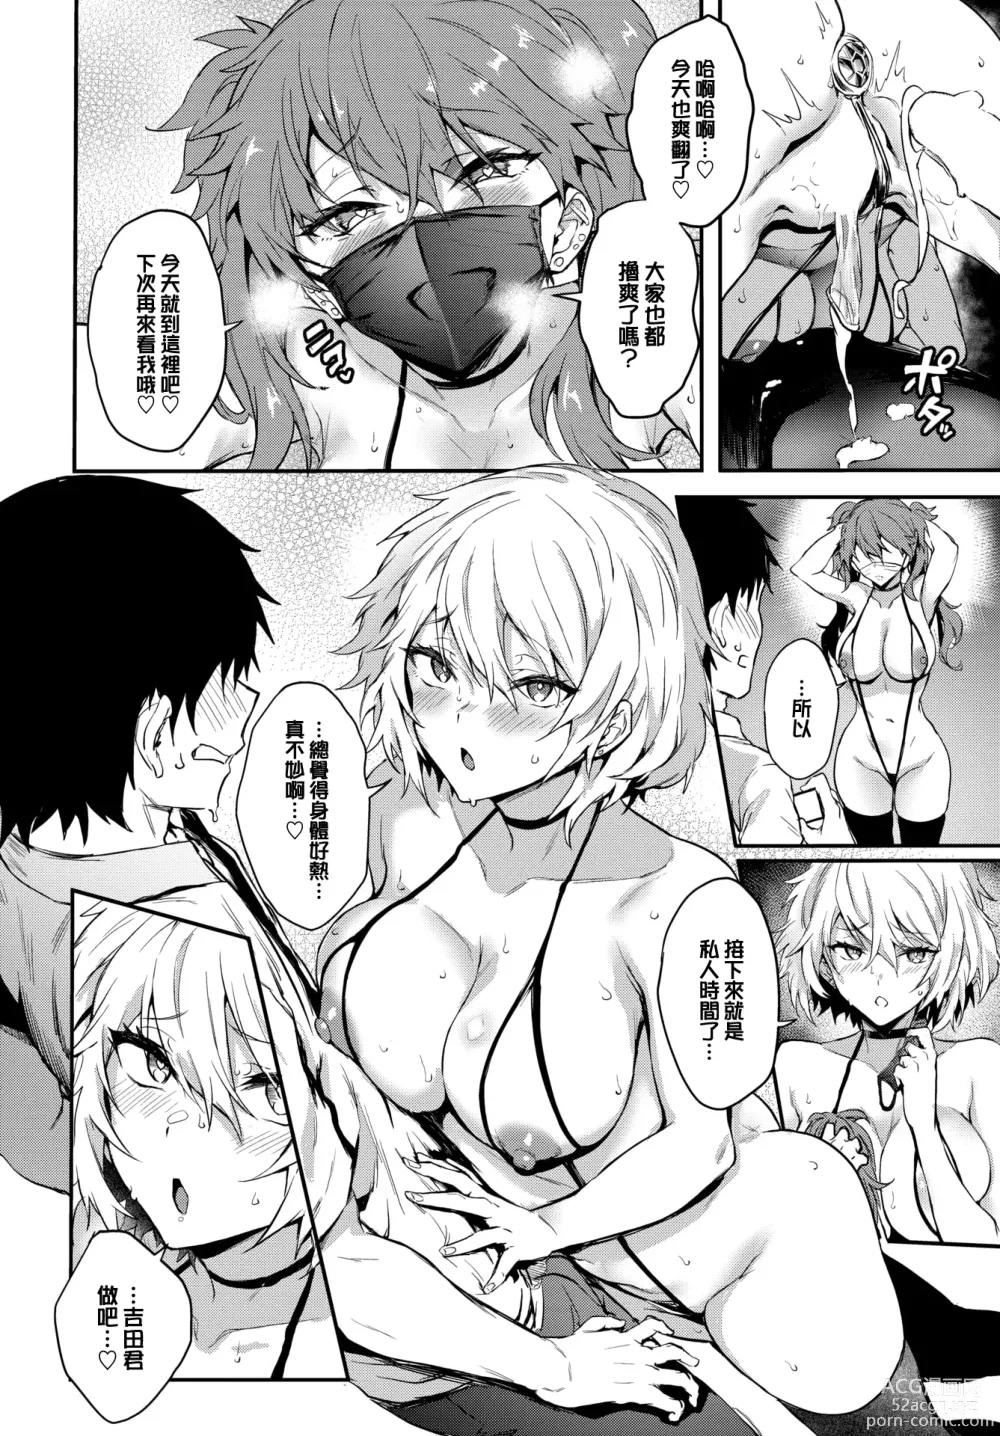 Page 7 of manga Double★Live2